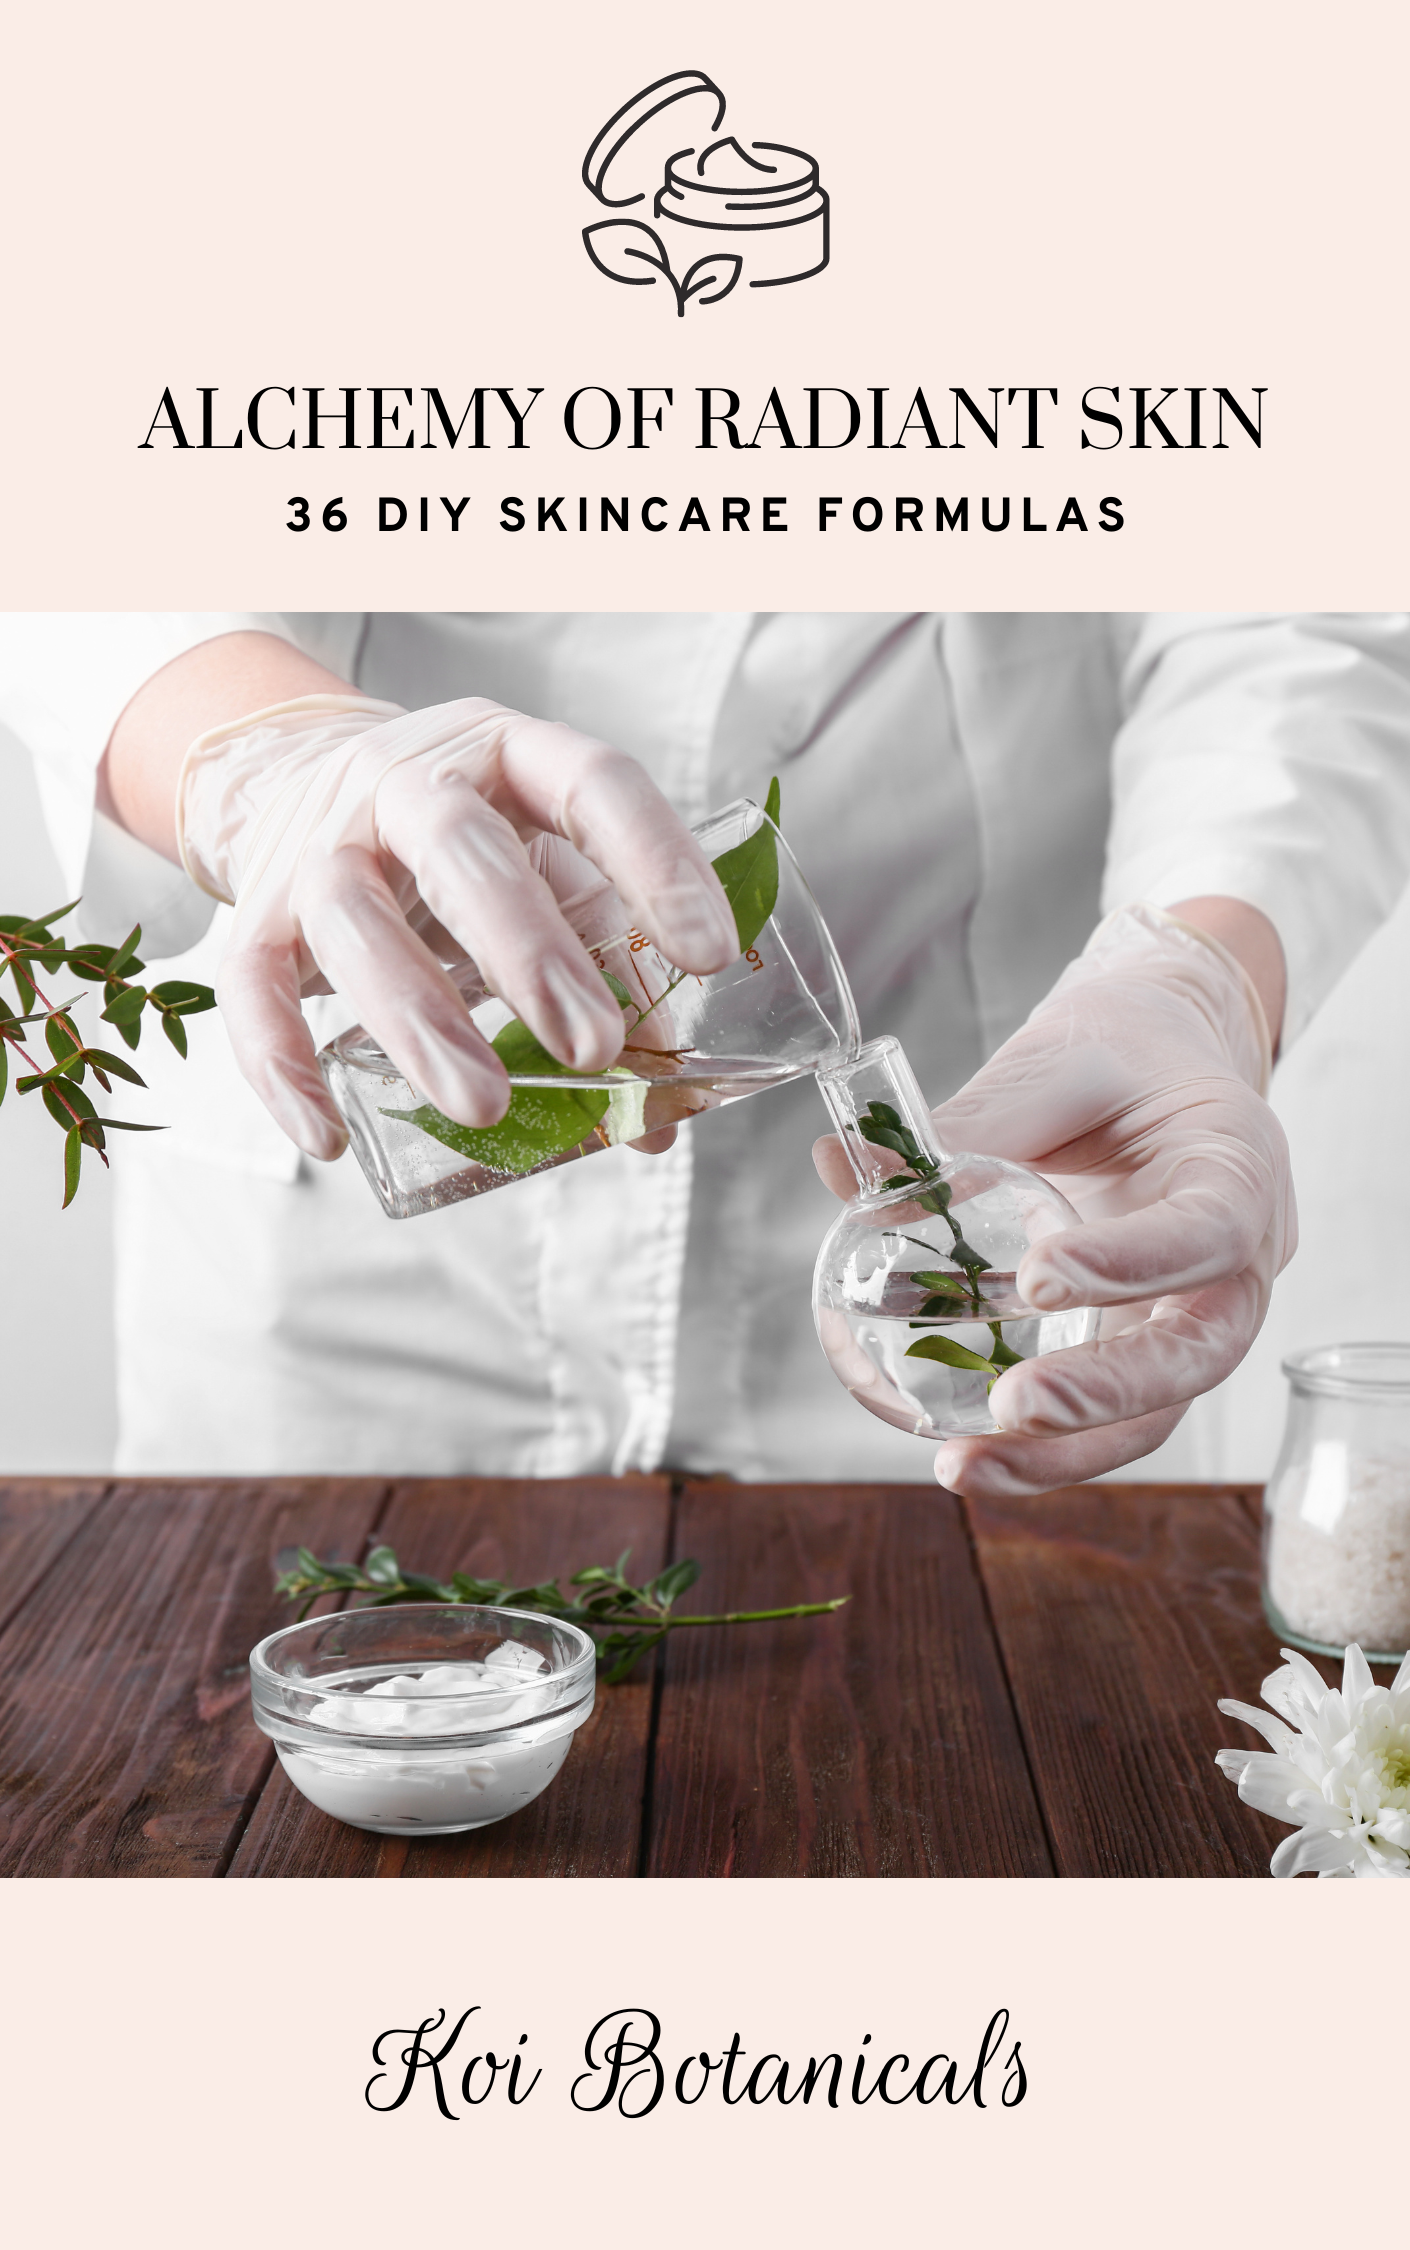 Alchemy of Radiant Skin: 36 DIY Skincare Formulas eBook - Koi Botanicals